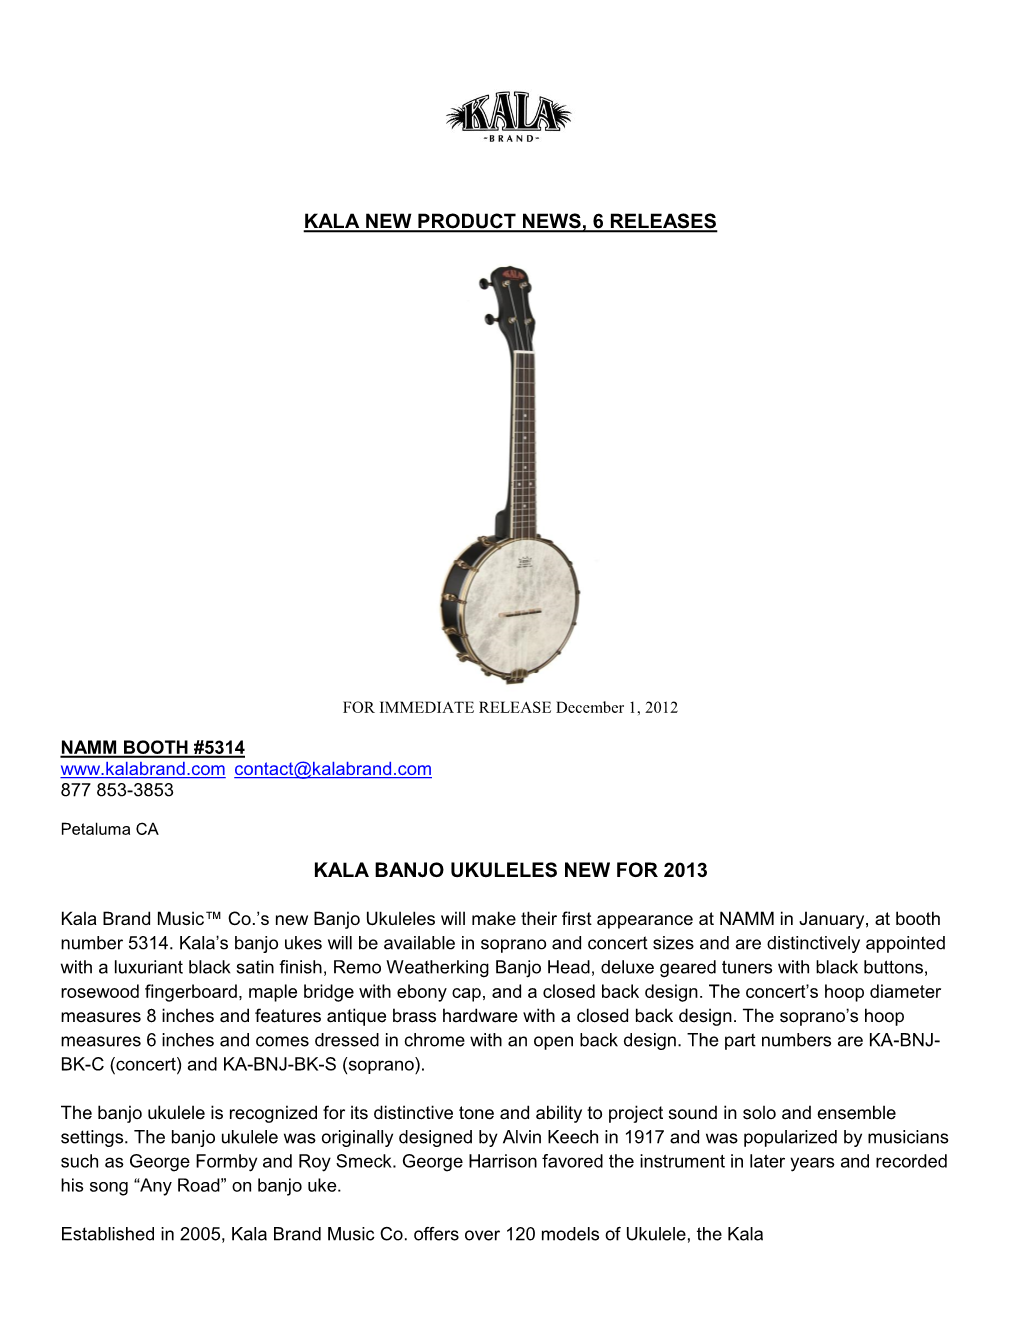 Kala New Product News, 6 Releases Kala Banjo